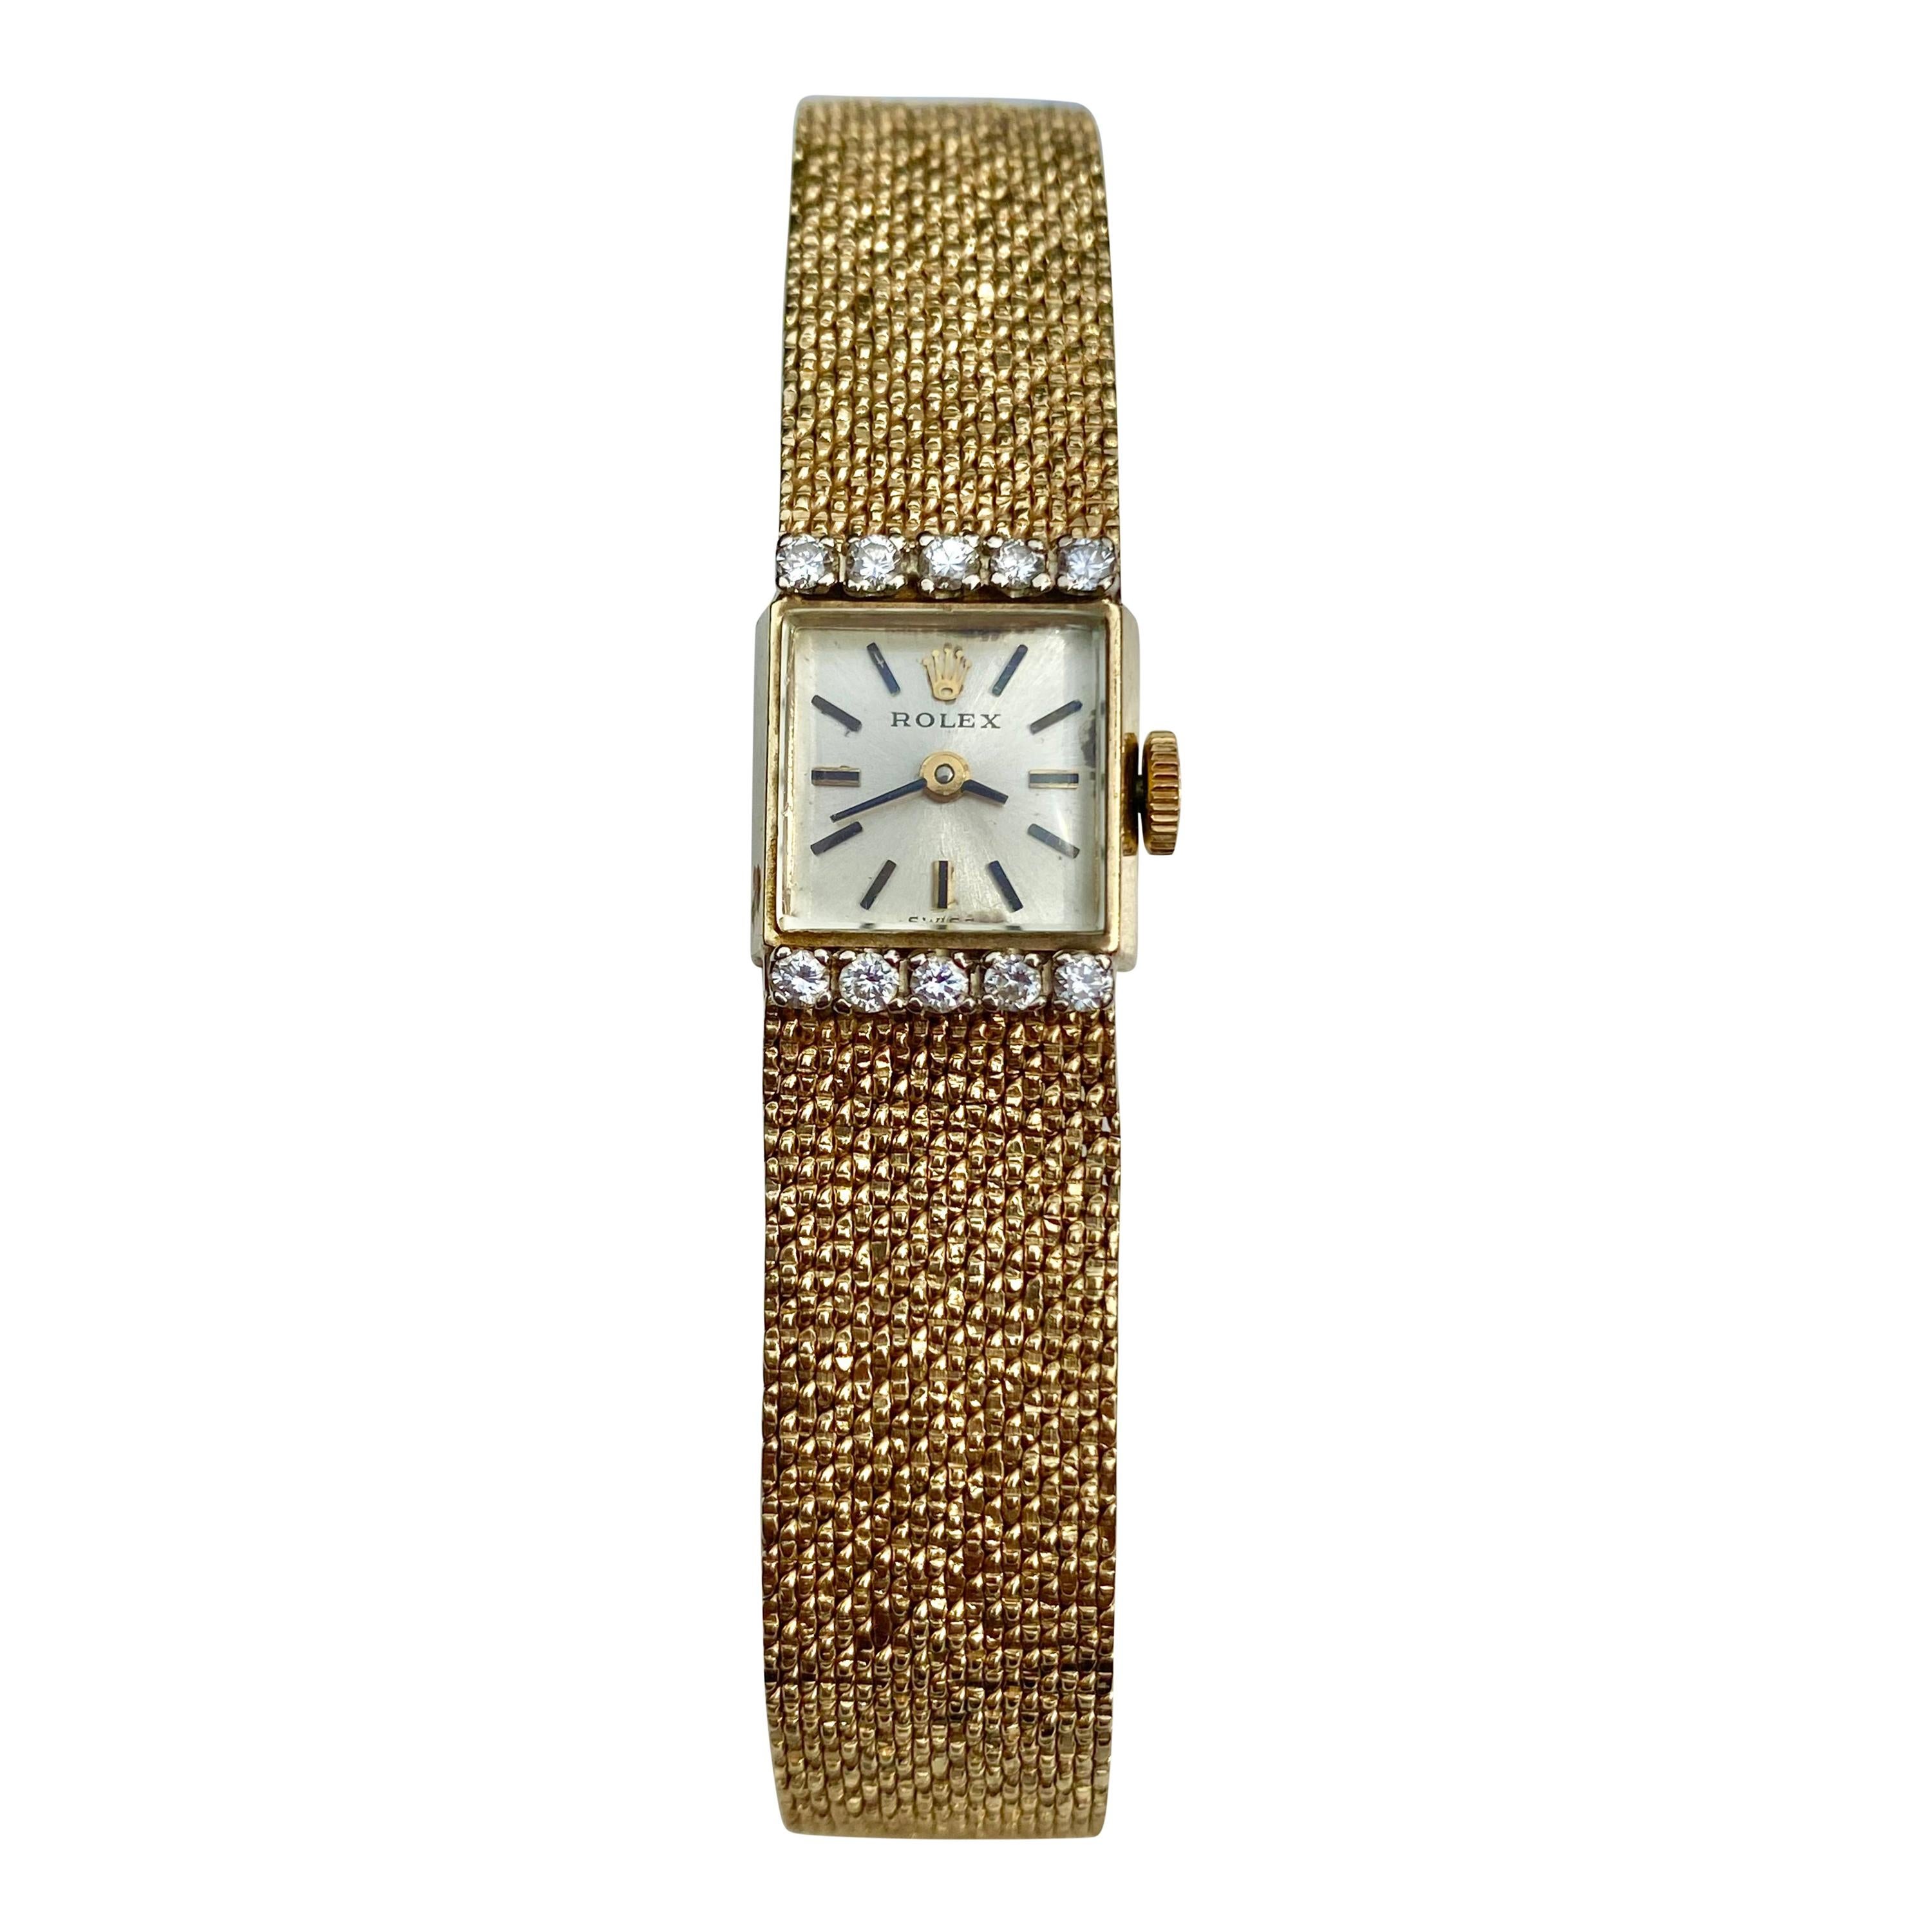 1940's Women's 14k Yellow Gold and Diamond Rolex Wristwatch Antique Rolex